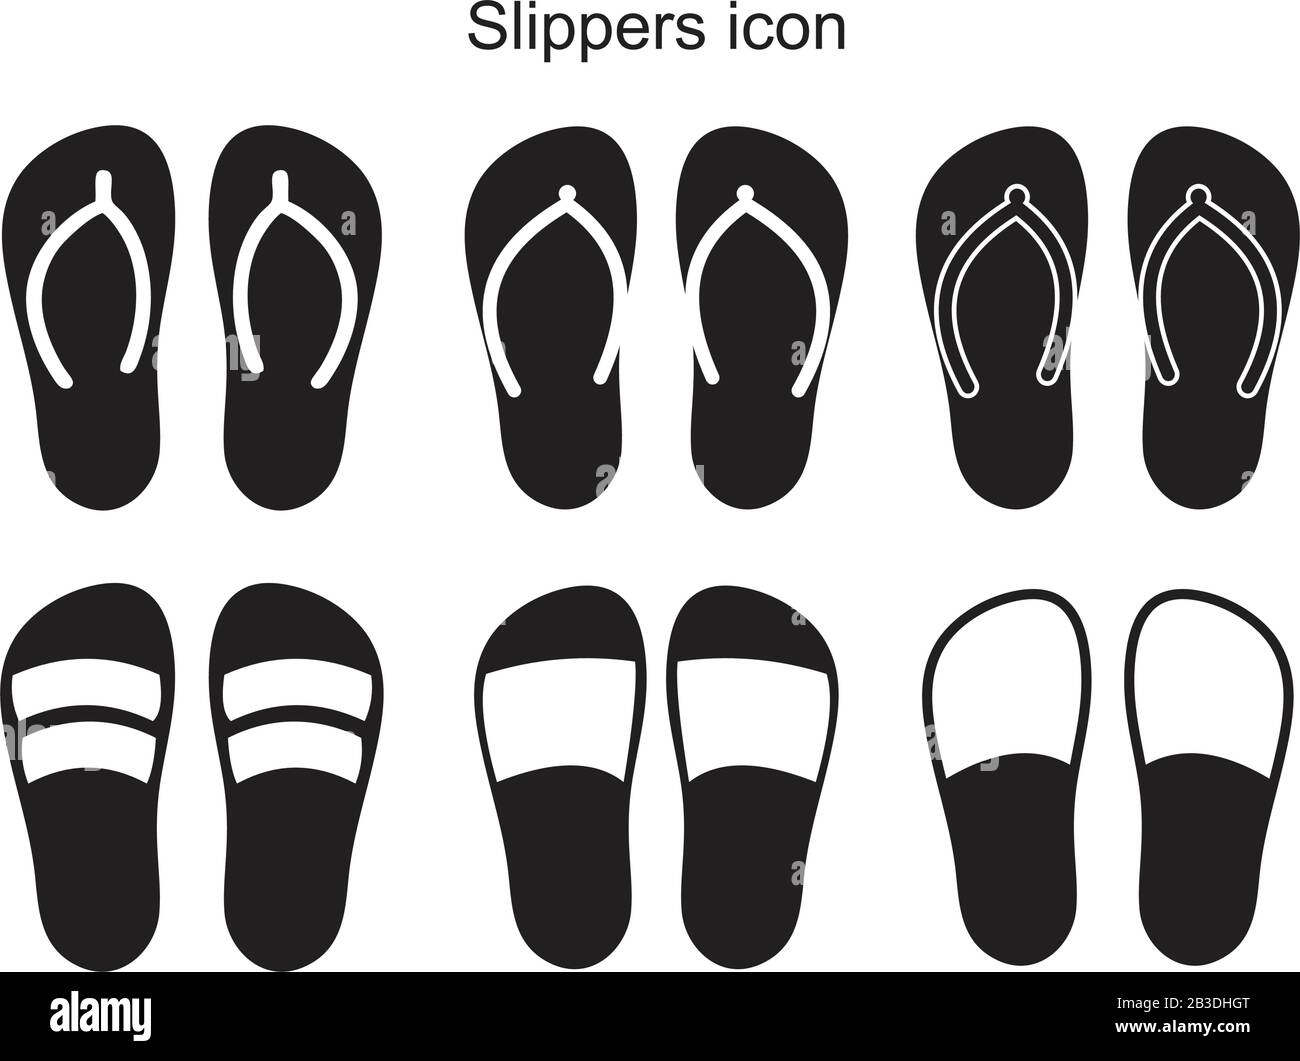 Slippers Icon Template schwarz Farbe editierbar. Pantoffeln Symbol Flat Vector Illustration für Grafik und Web-Design. Stock Vektor